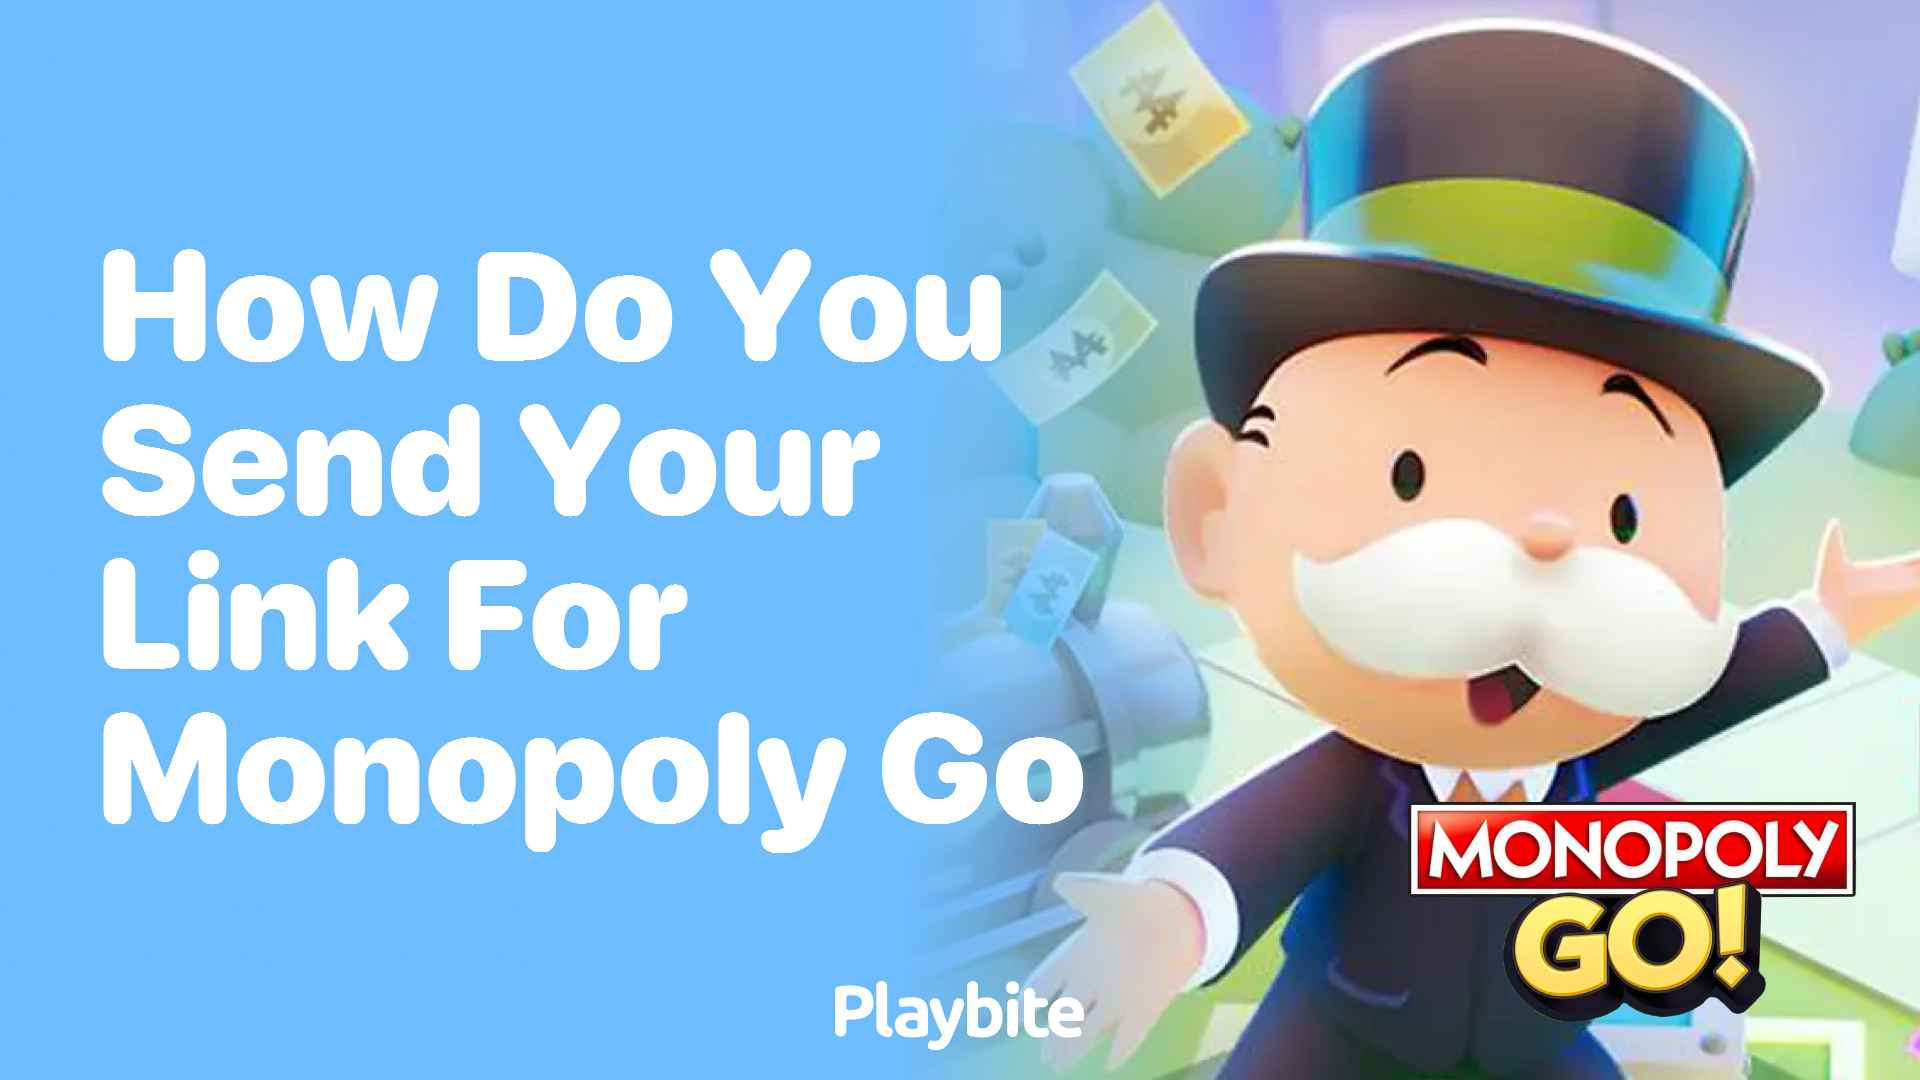 How do you send your link for Monopoly Go?